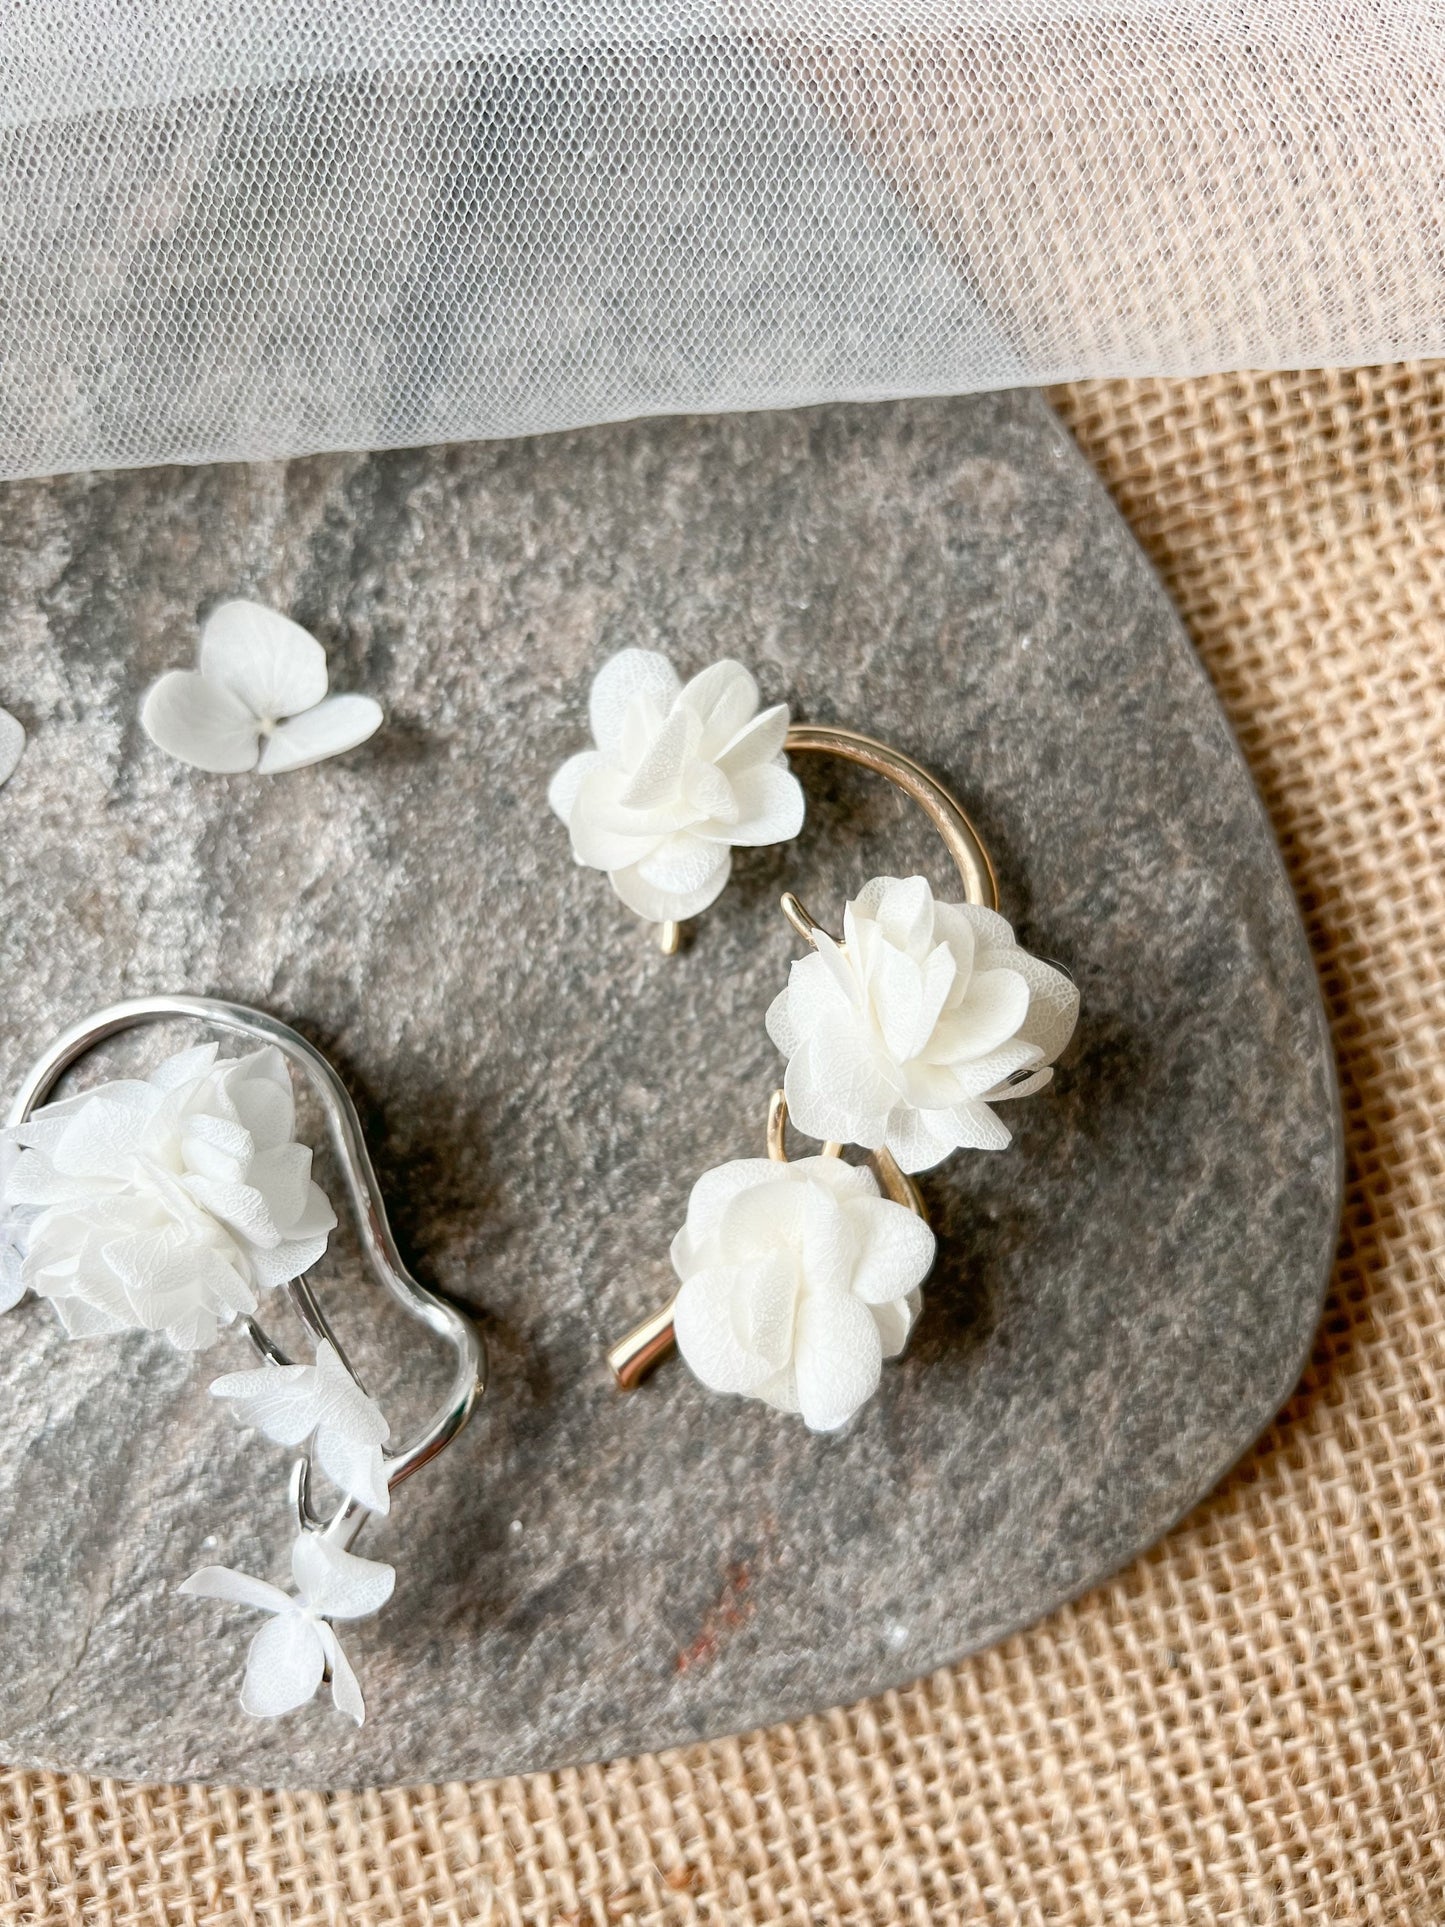 Boho Bridal Flower Ear Wrap White, Bridesmaids Floral Earrings Ivory Gold Silver Wedding Floral Ear Climber Cuff, Handmade Accessories Bride